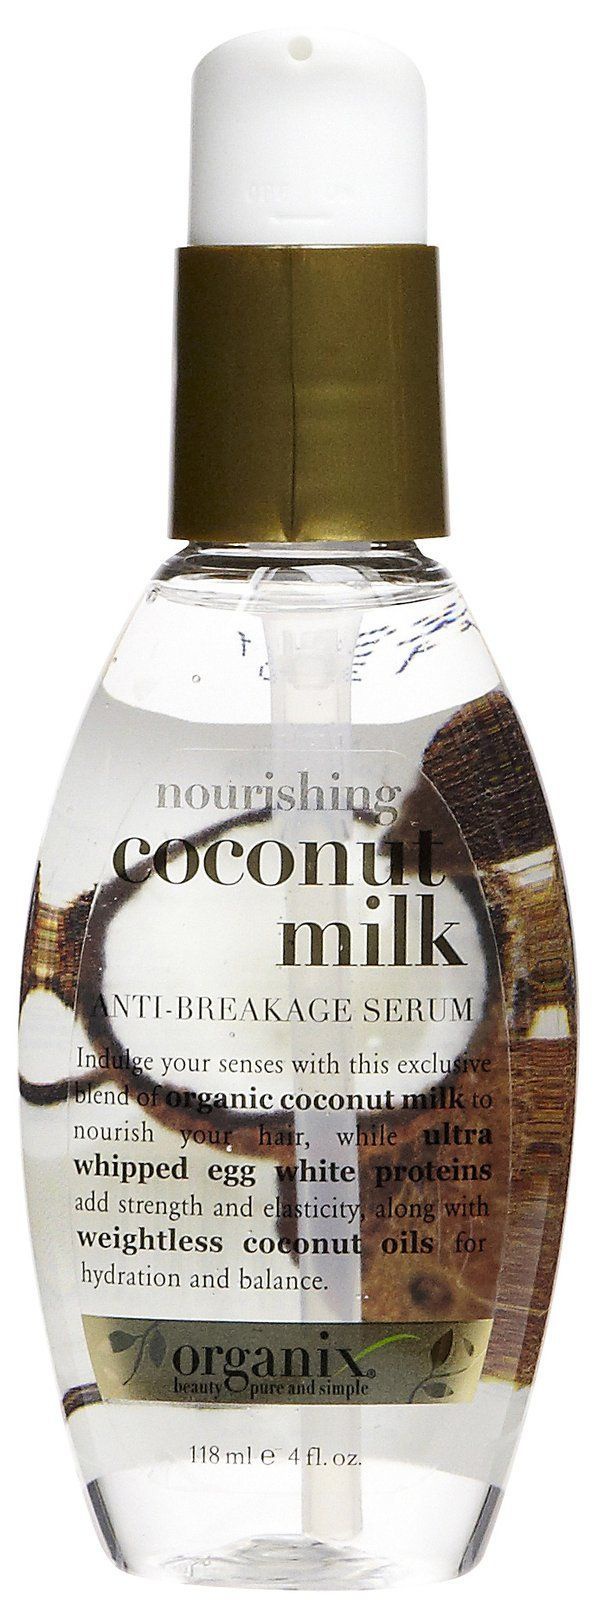 OGX Nourishing Cocunut Milk Anit-Breakage Serum